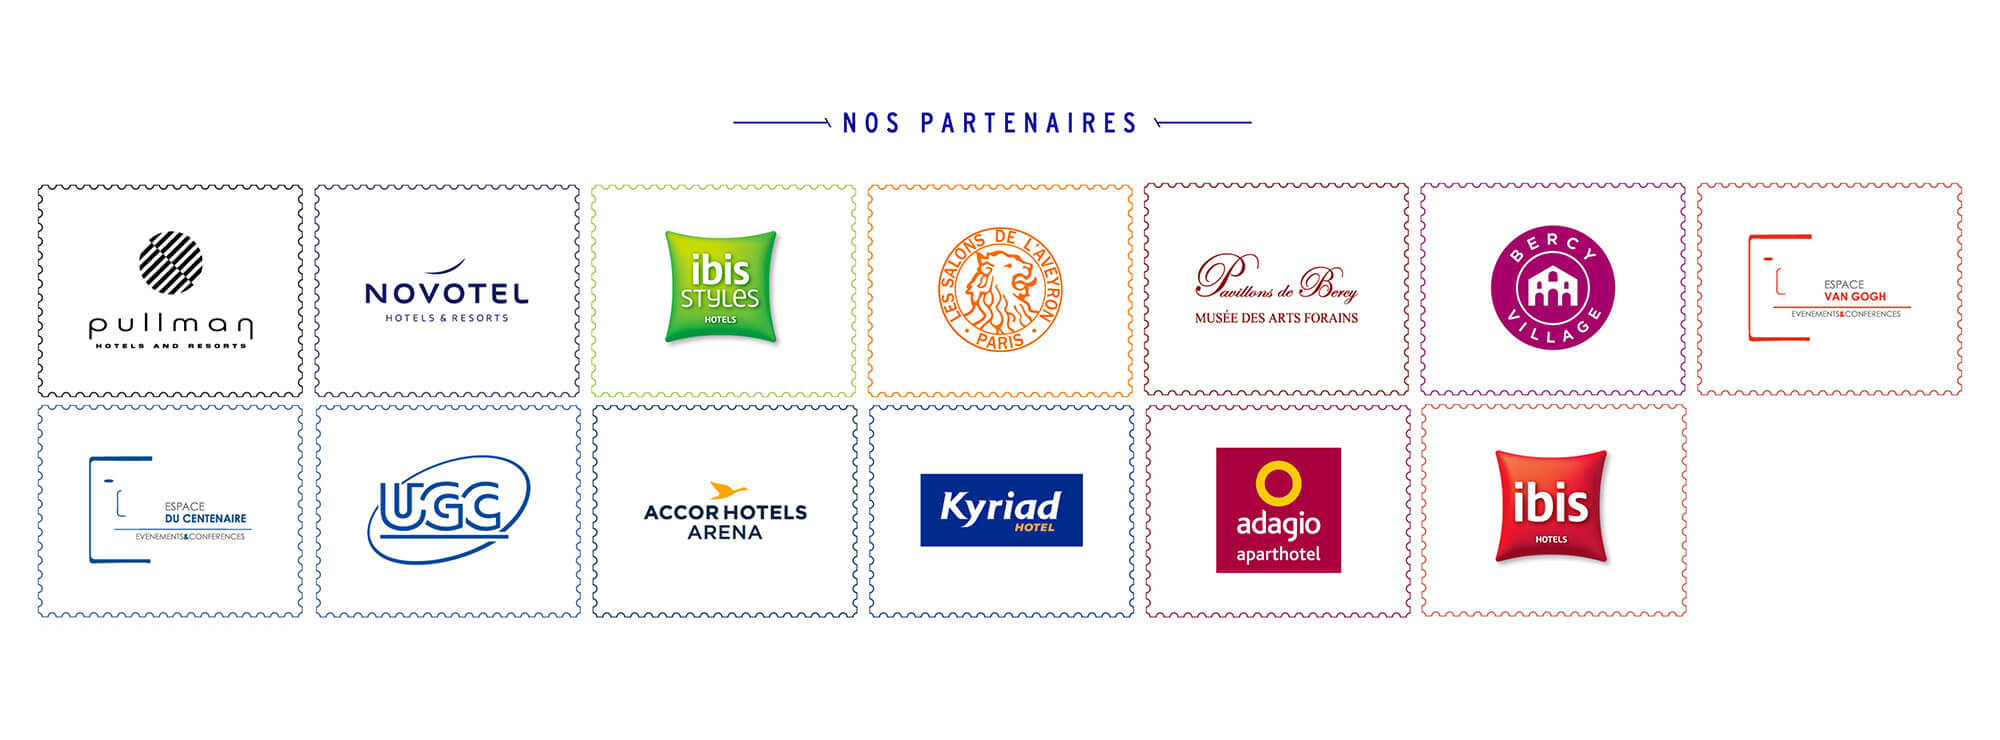 09.destination paris bercy partenaires.jpg